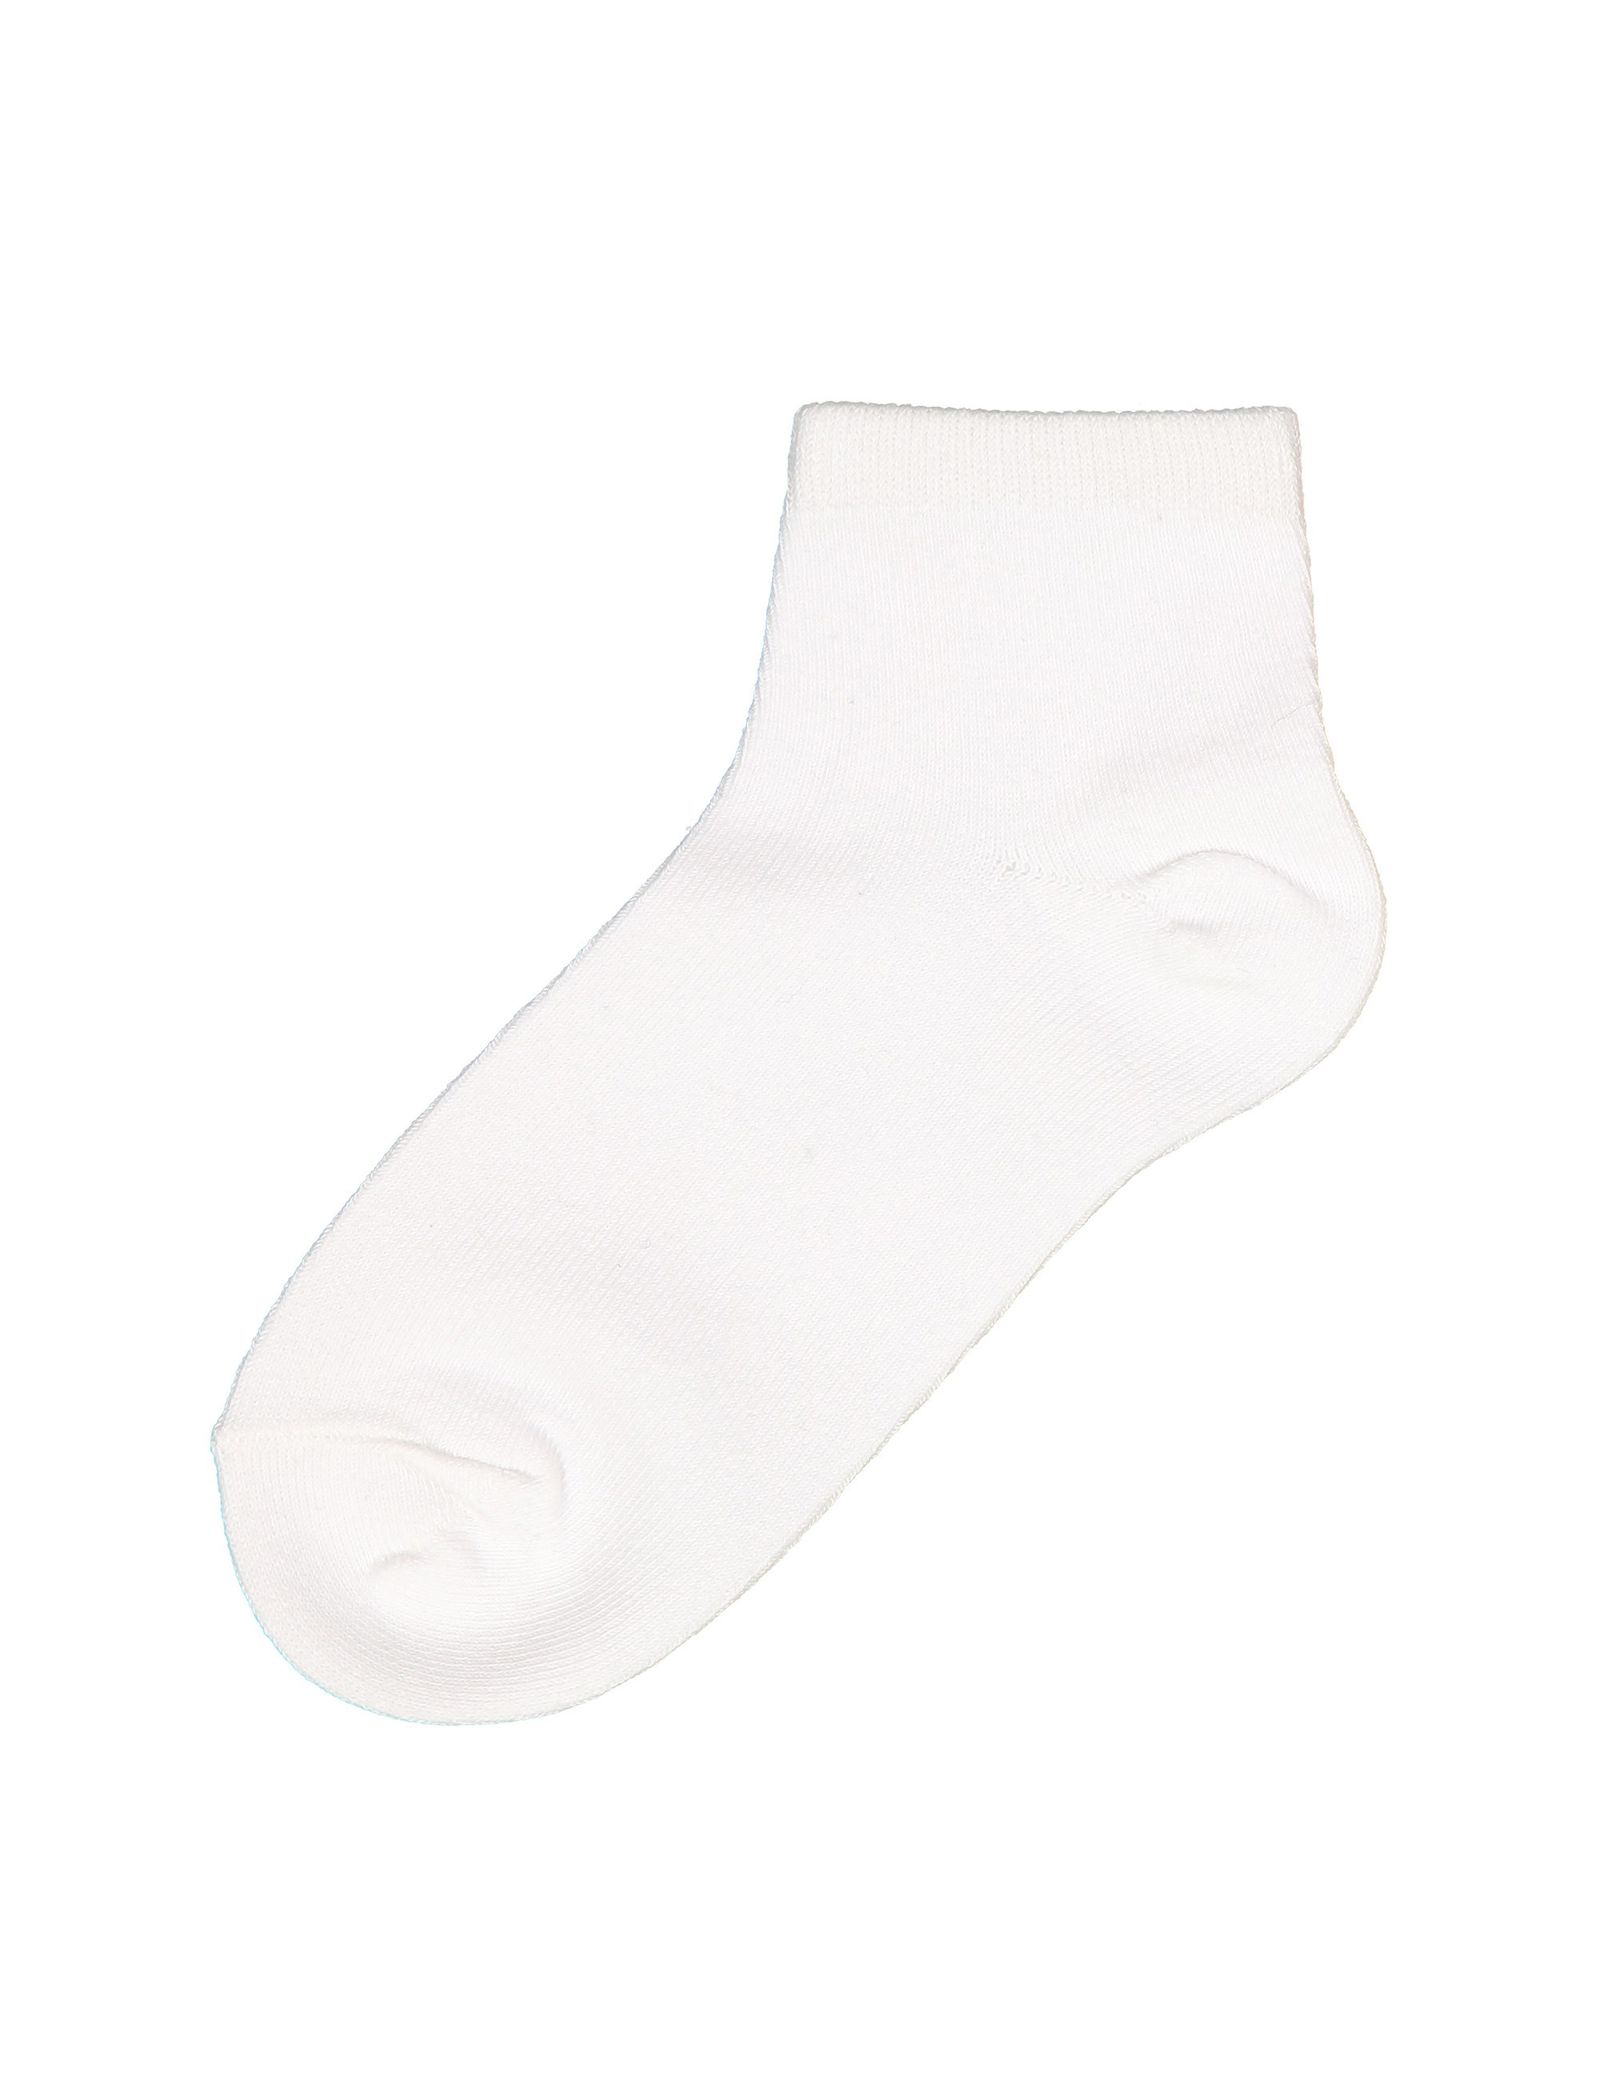 جوراب نخی ساق کوتاه مردانه بسته 5 عددی - باتا -  - 11